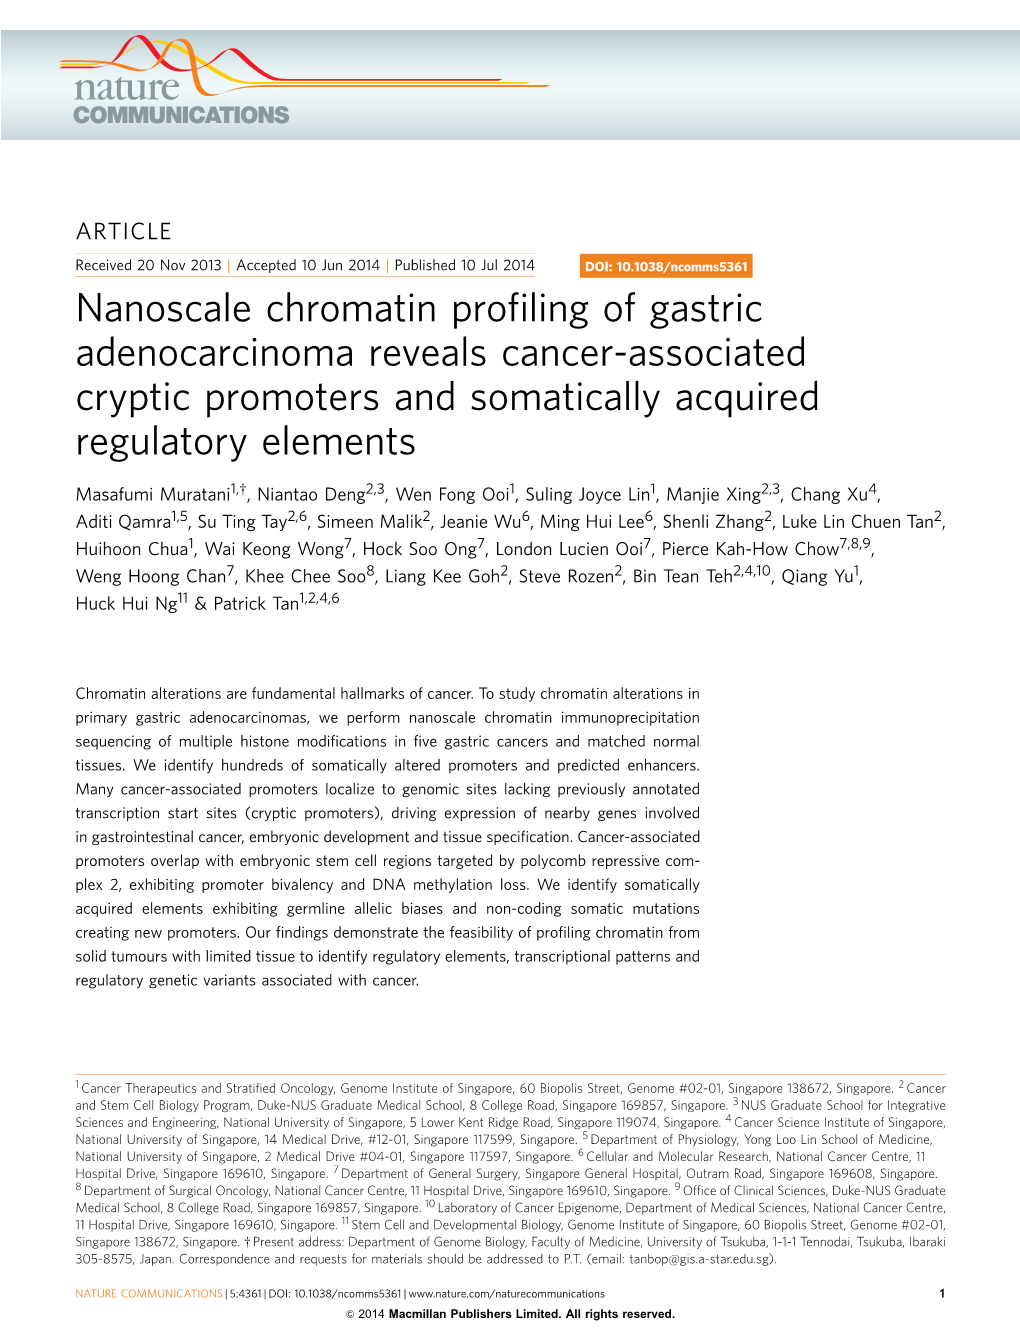 Nanoscale Chromatin Profiling of Gastric Adenocarcinoma